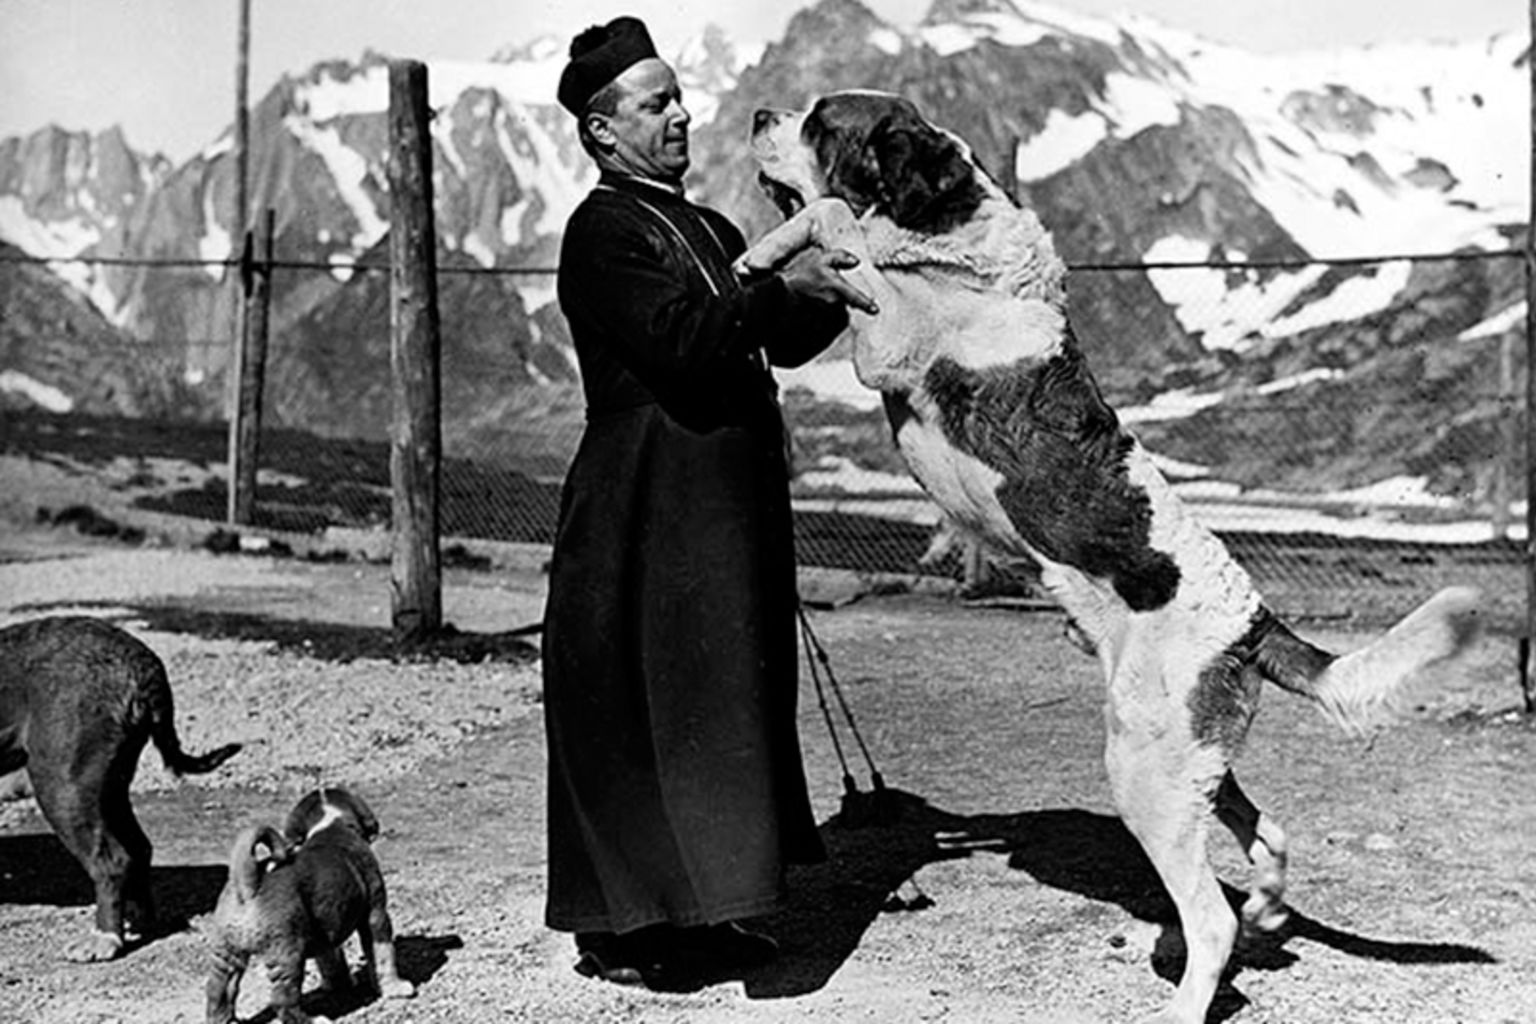 Chanoine et chien au Grand-Saint-Bernard, ca. 1950-1960, ©Max Kettel, UVT, Médiathèque Valais – Martigny.